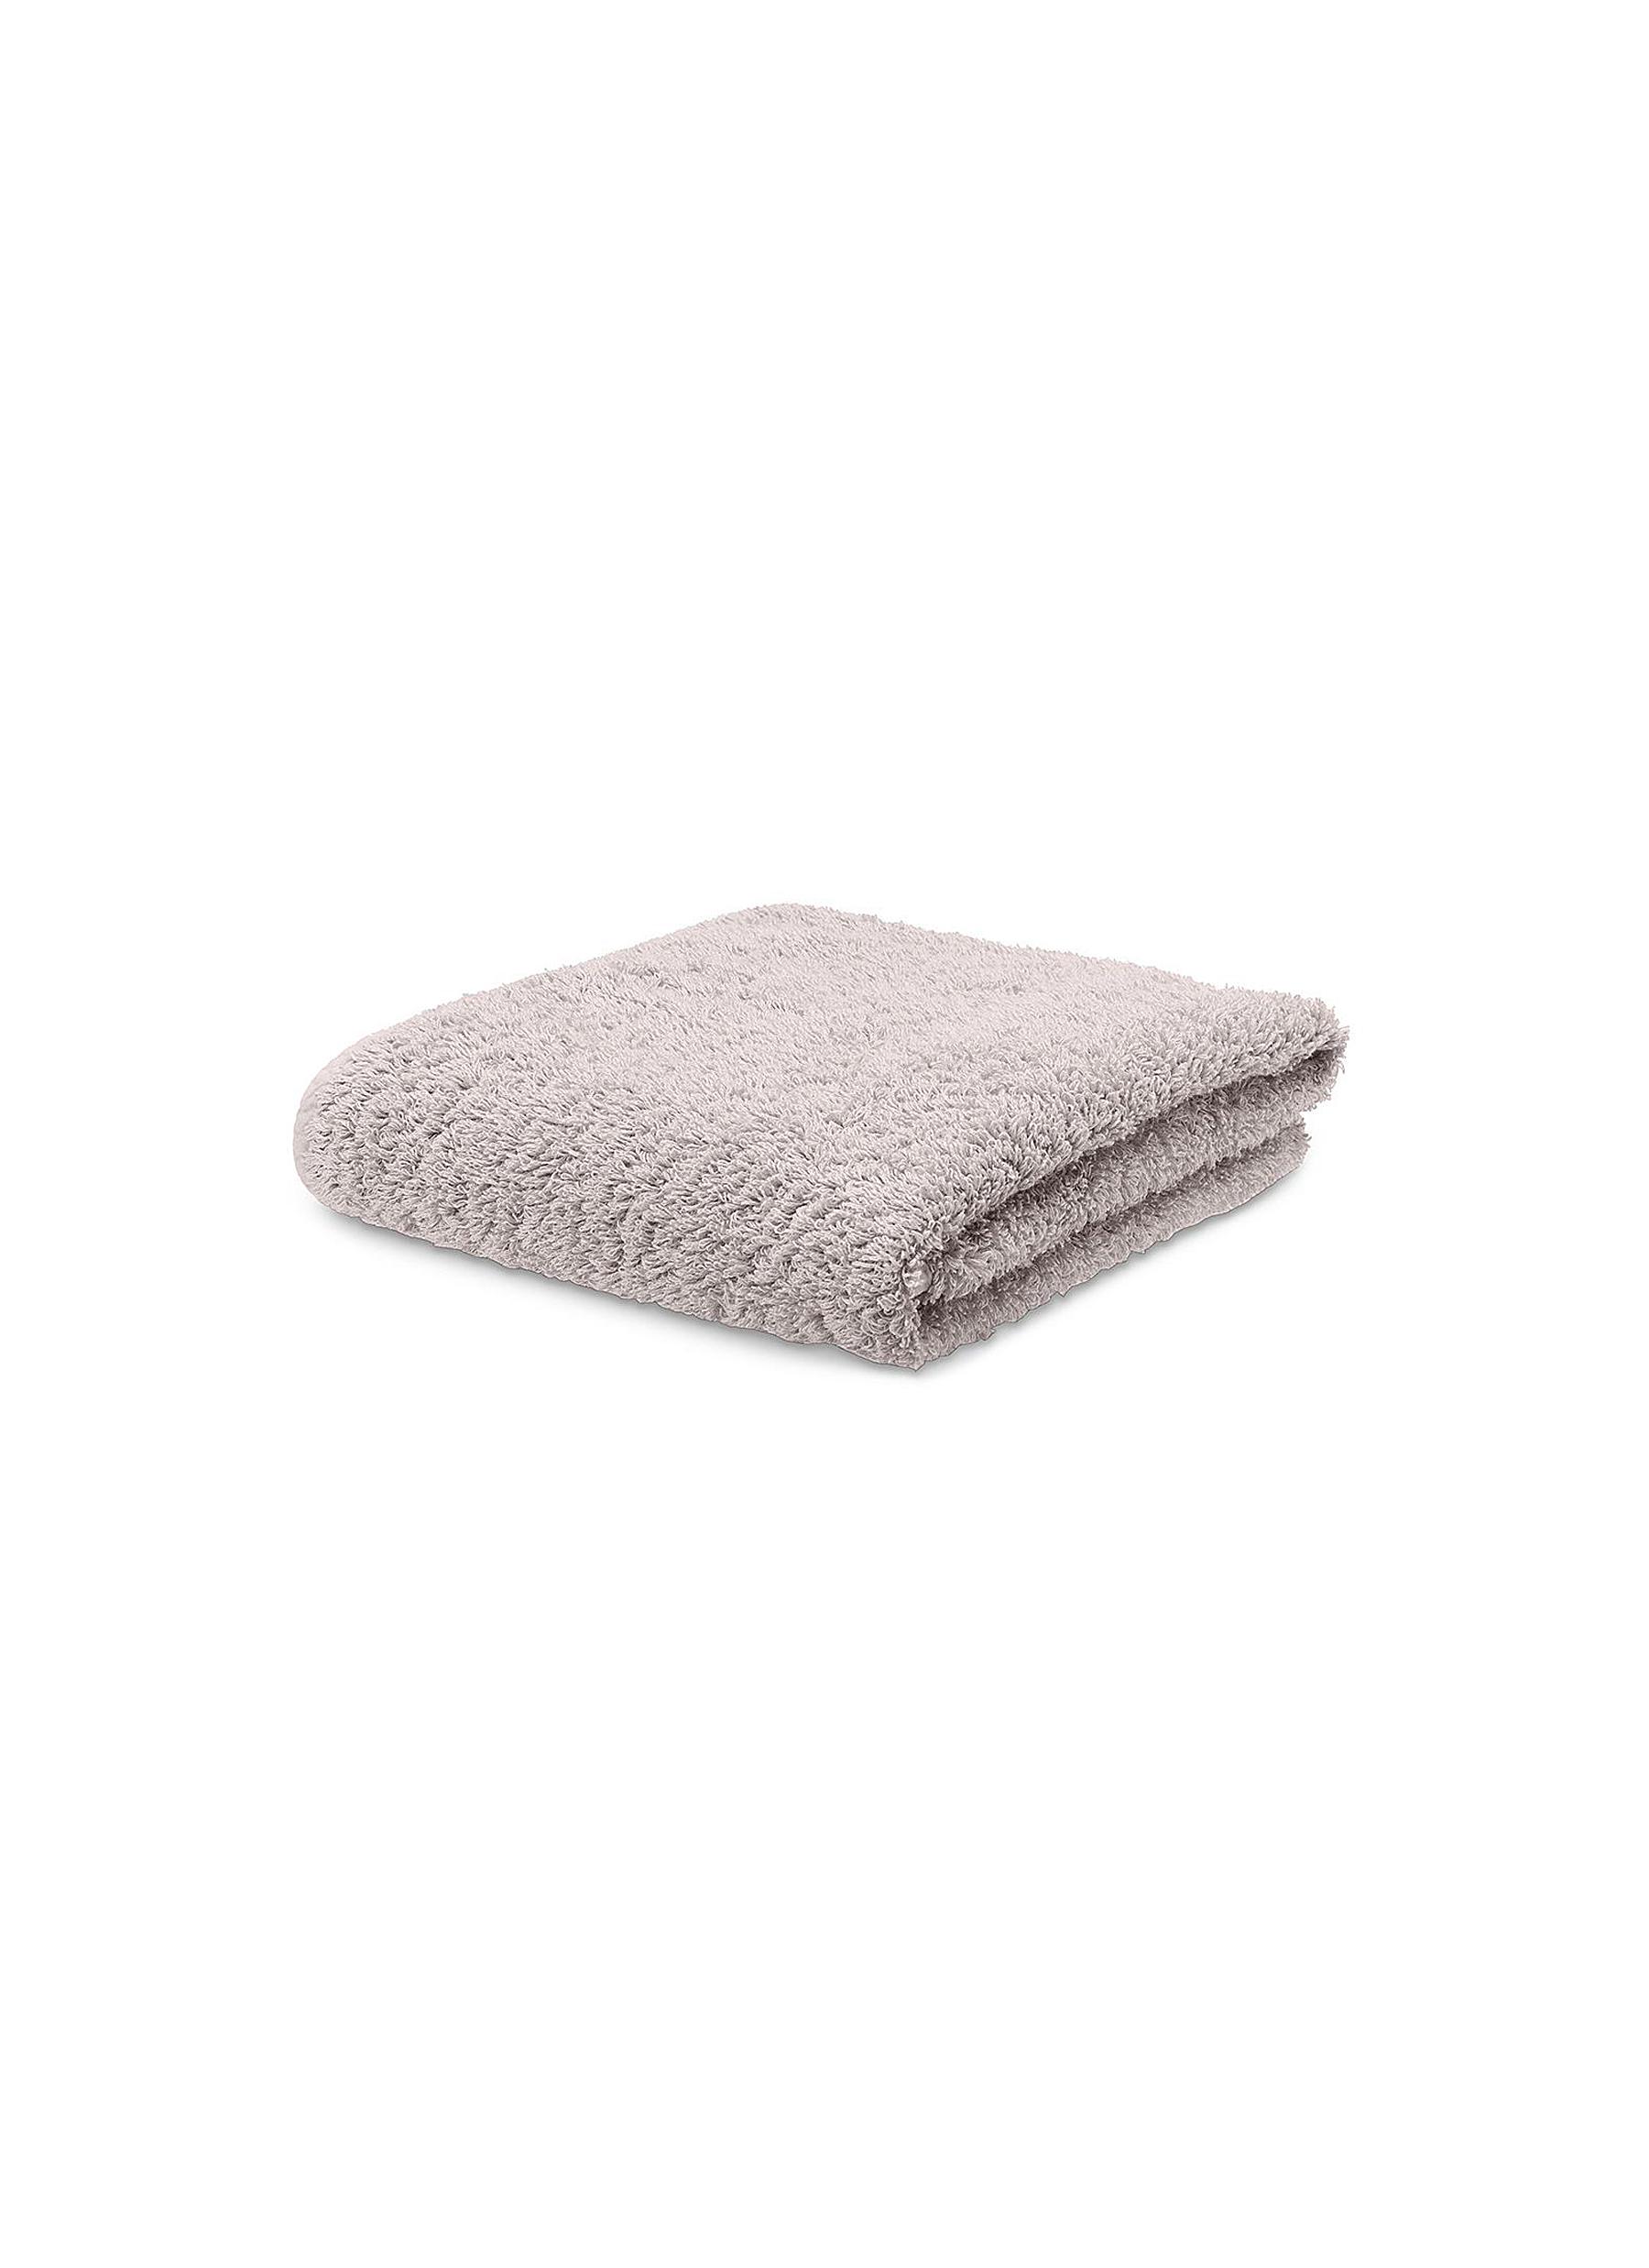 Super Pile hand towel - Cloud